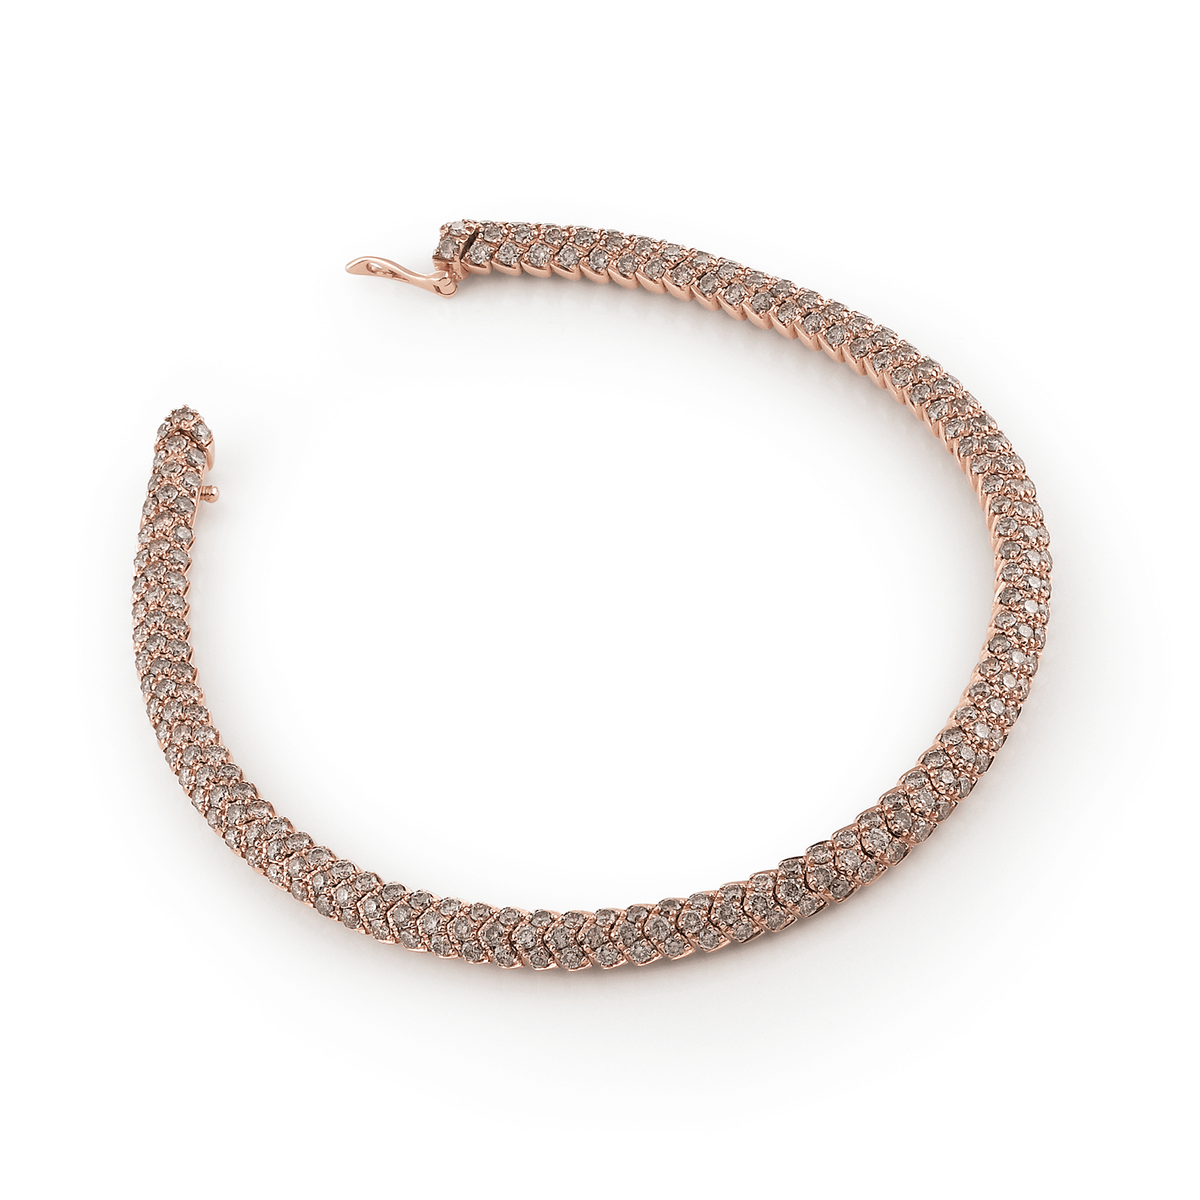 Al Coro Amori Bracelet in 18k Rose Gold with Brown Diamonds - Orsini Jewellers NZ